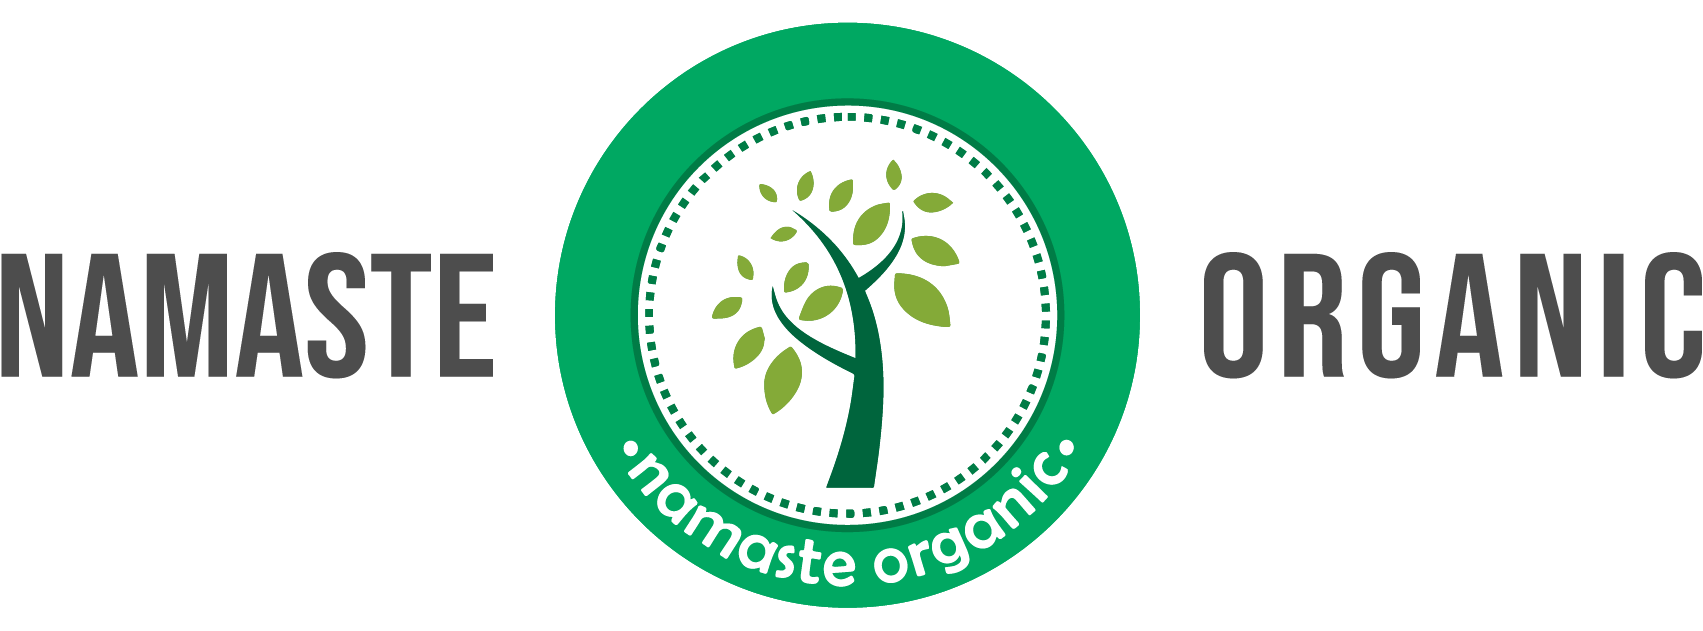 Namaste Organic